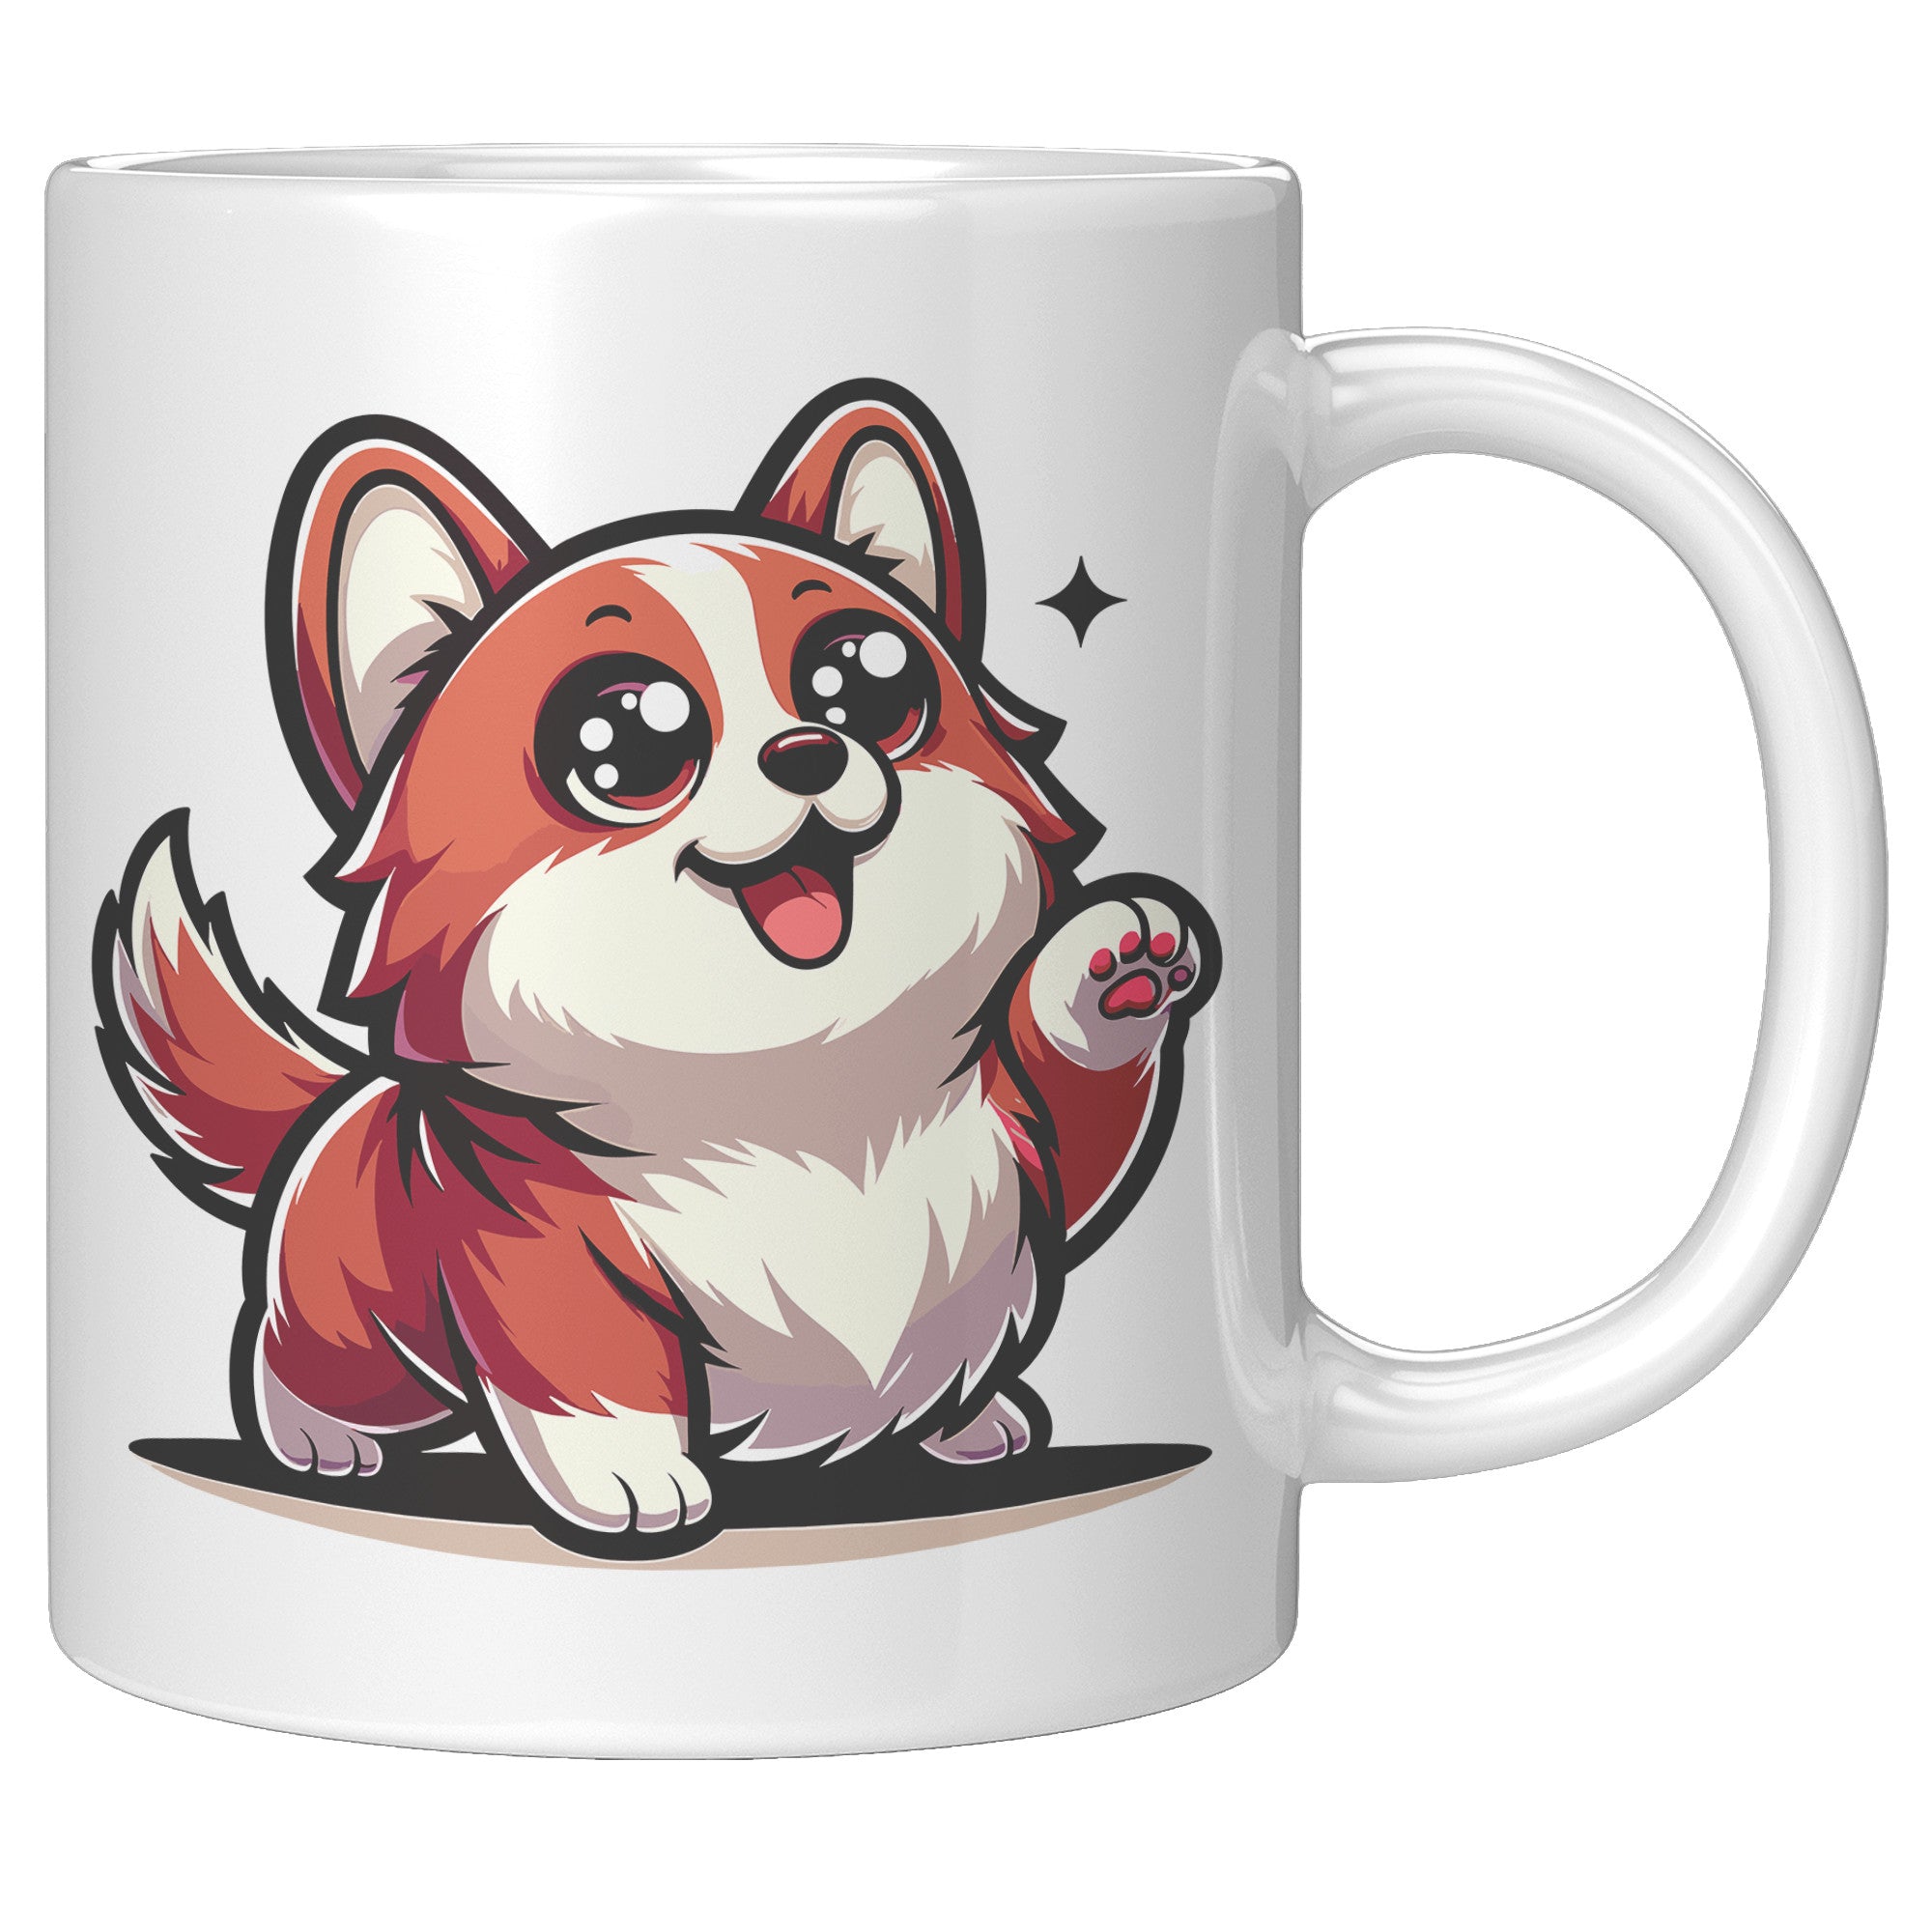 11oz Corgi Lover Cartoon Mug - Adorable Corgi Dog Mug - Perfect Gift for Corgi Owners - Cute Pembroke Welsh Corgi Mug" - C